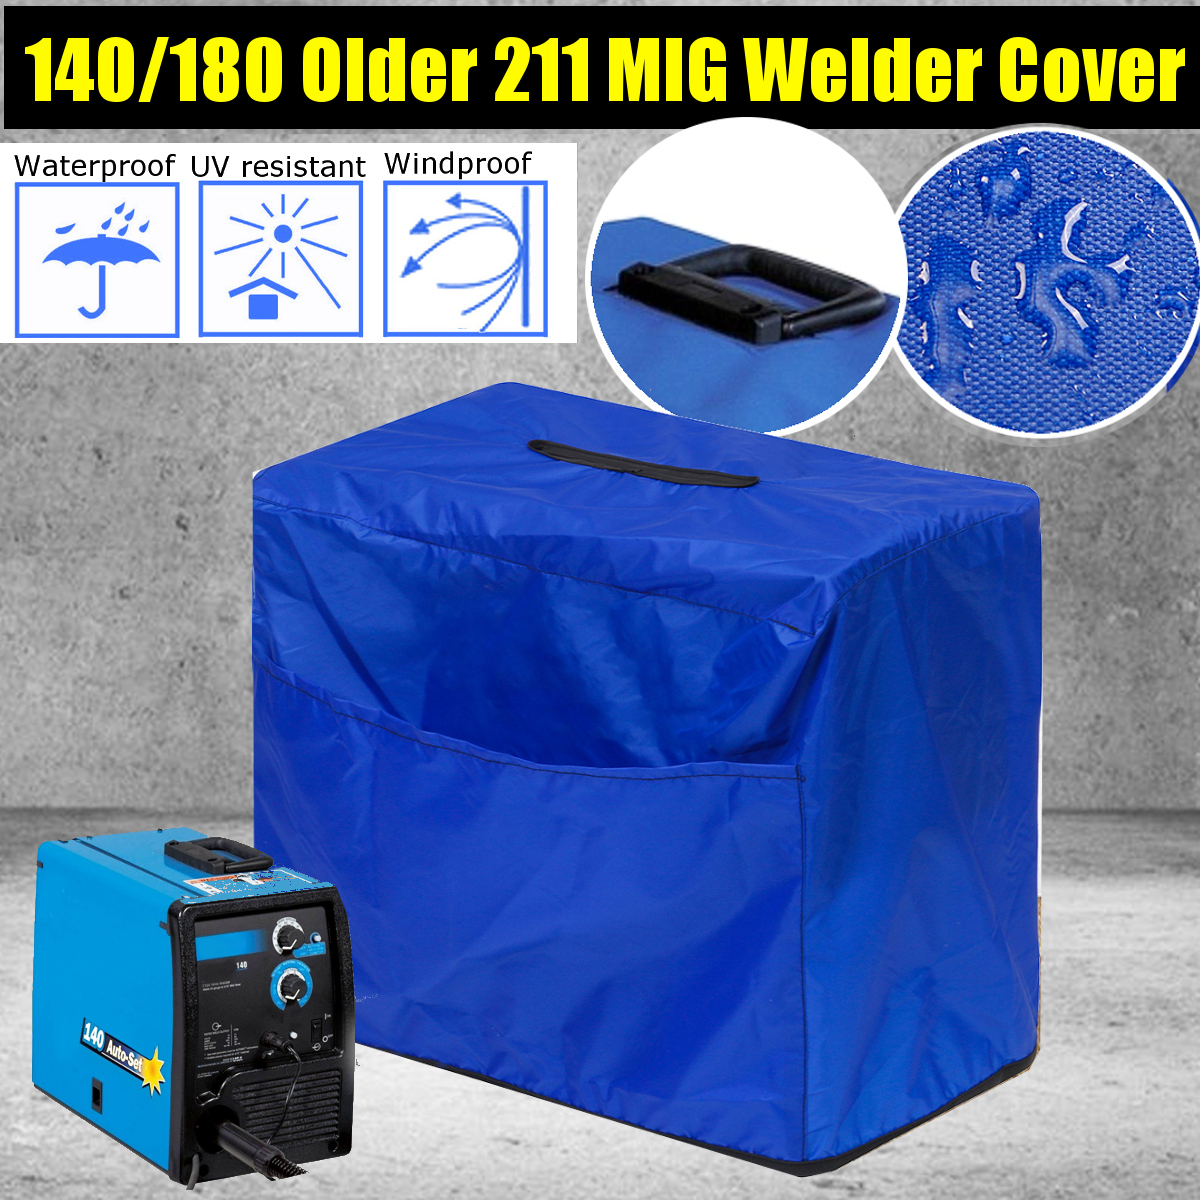 47x28x37cm-Cover-for-Miller-Millermatic-140-180-Older-Model-211-MIG-Welders-1376940-1